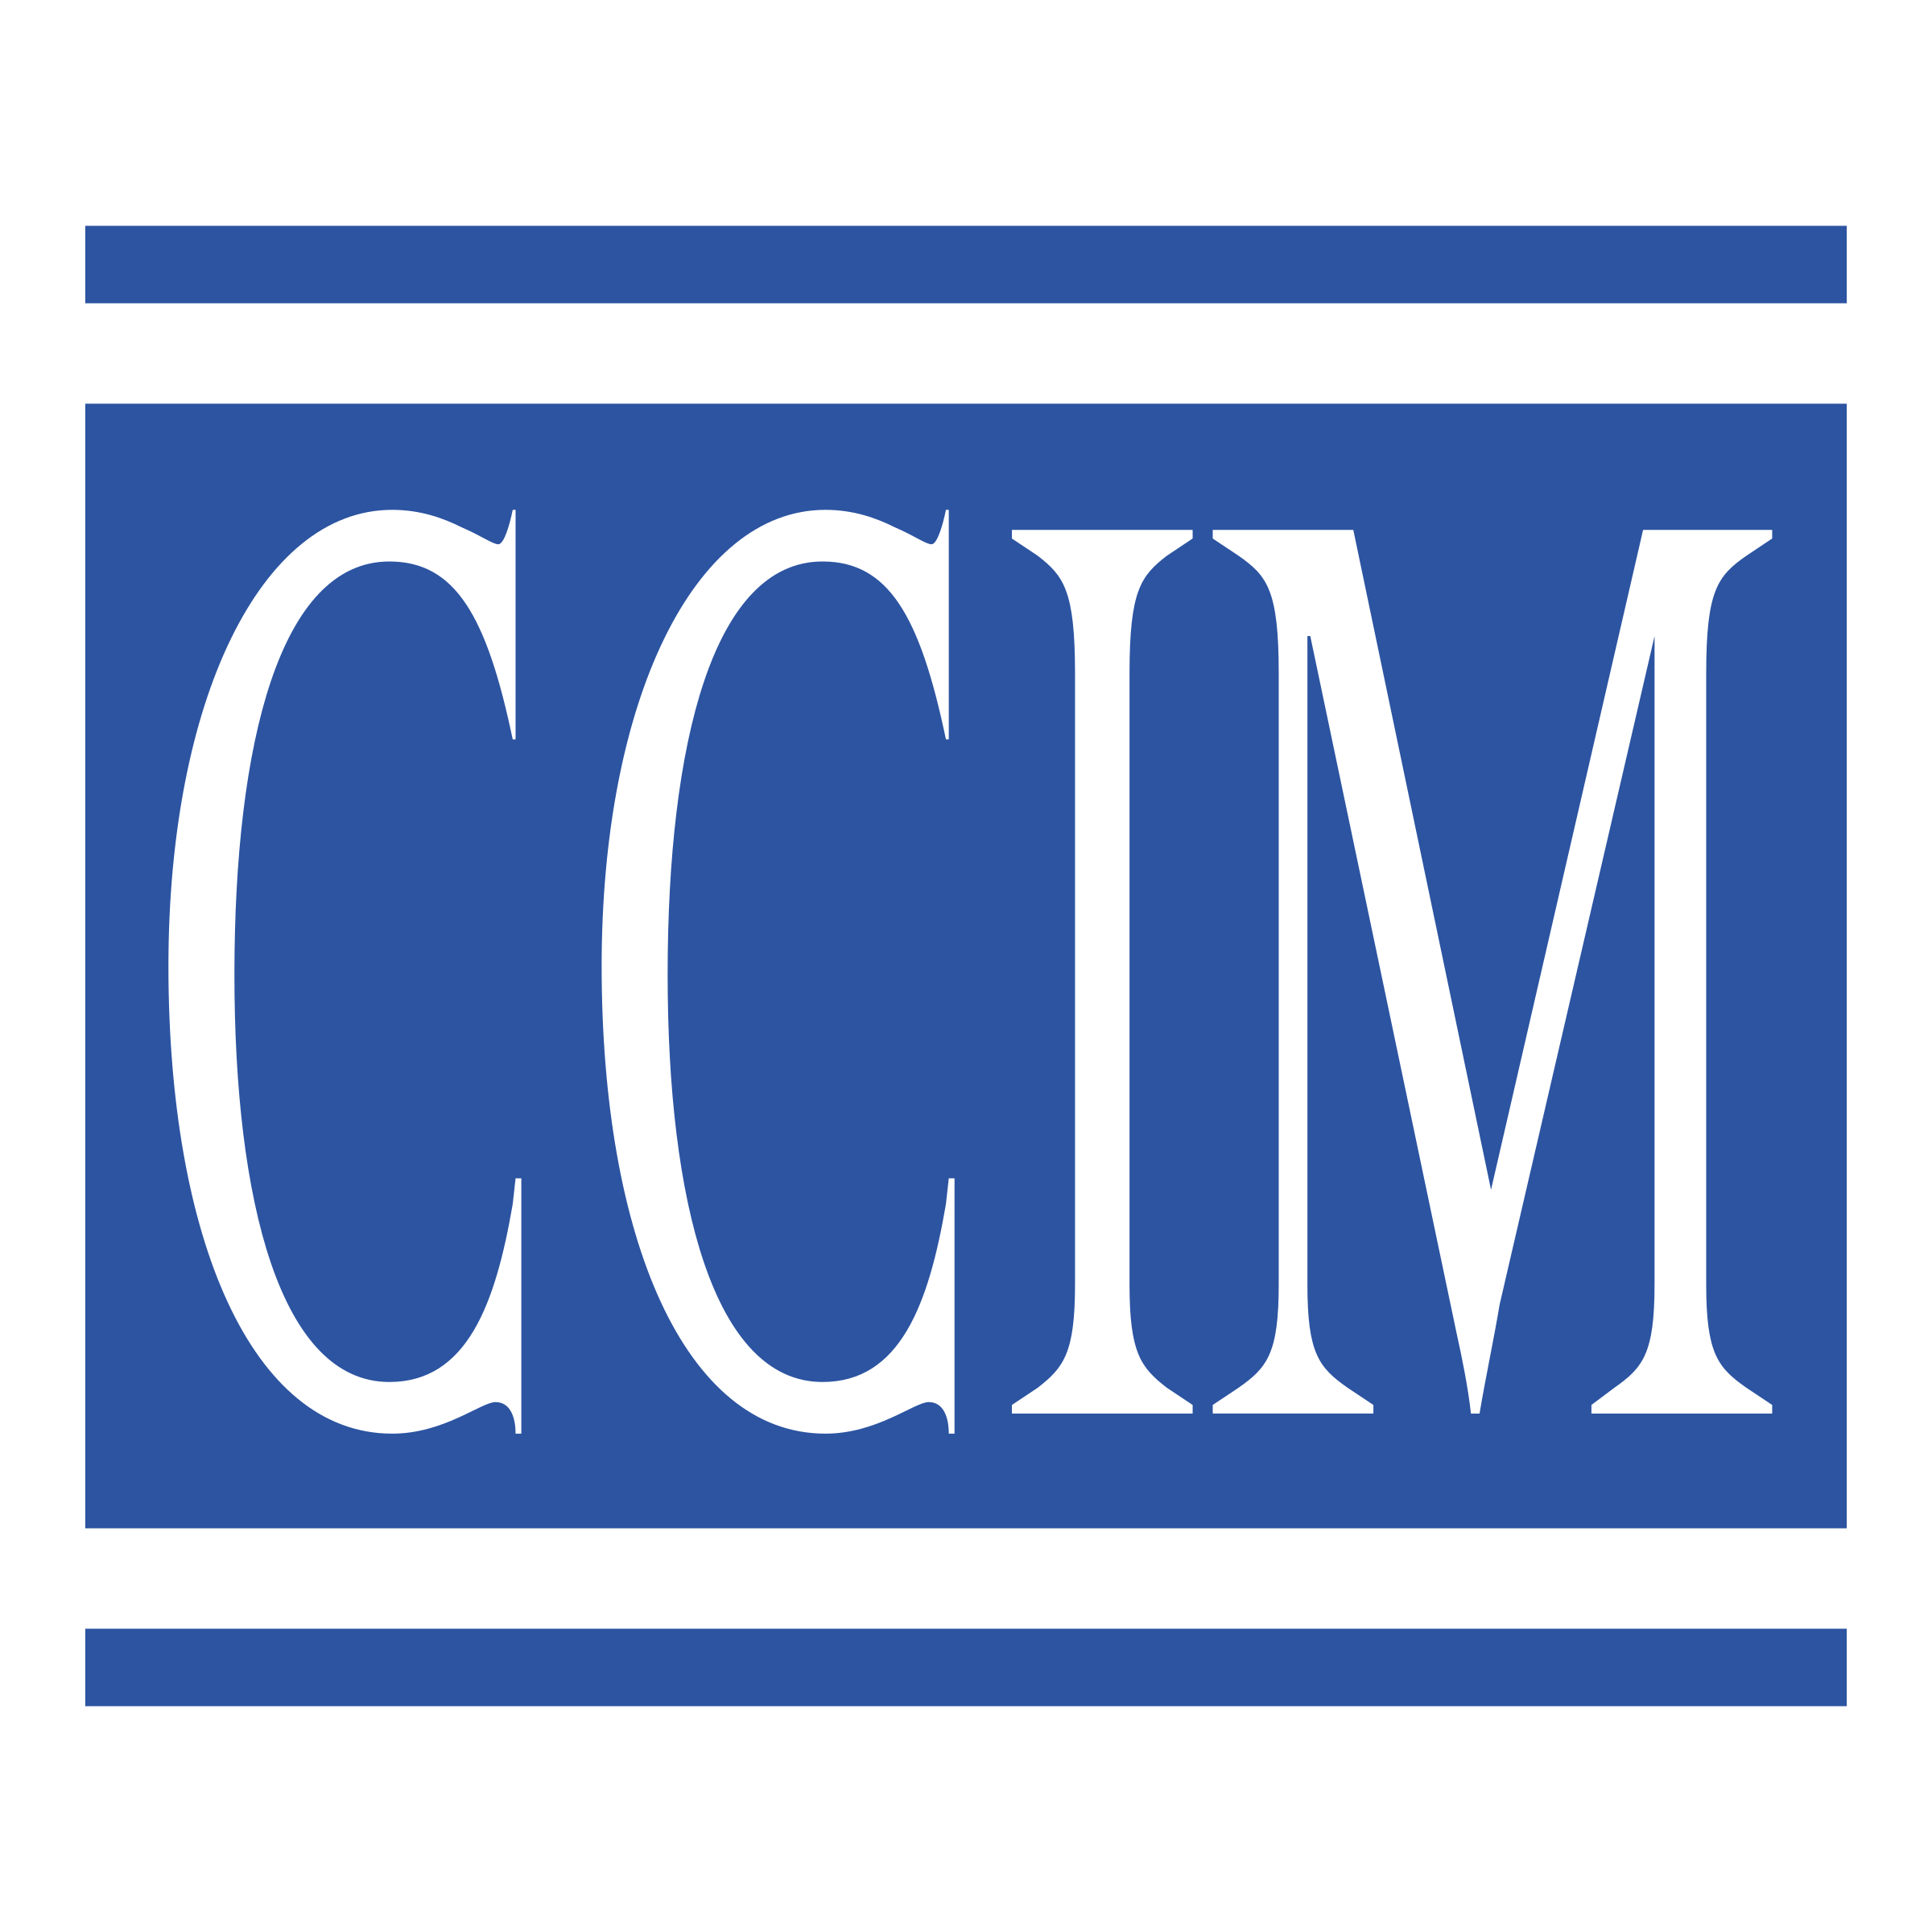 Ccim Logo - CCIM Logo PNG Transparent & SVG Vector - Freebie Supply